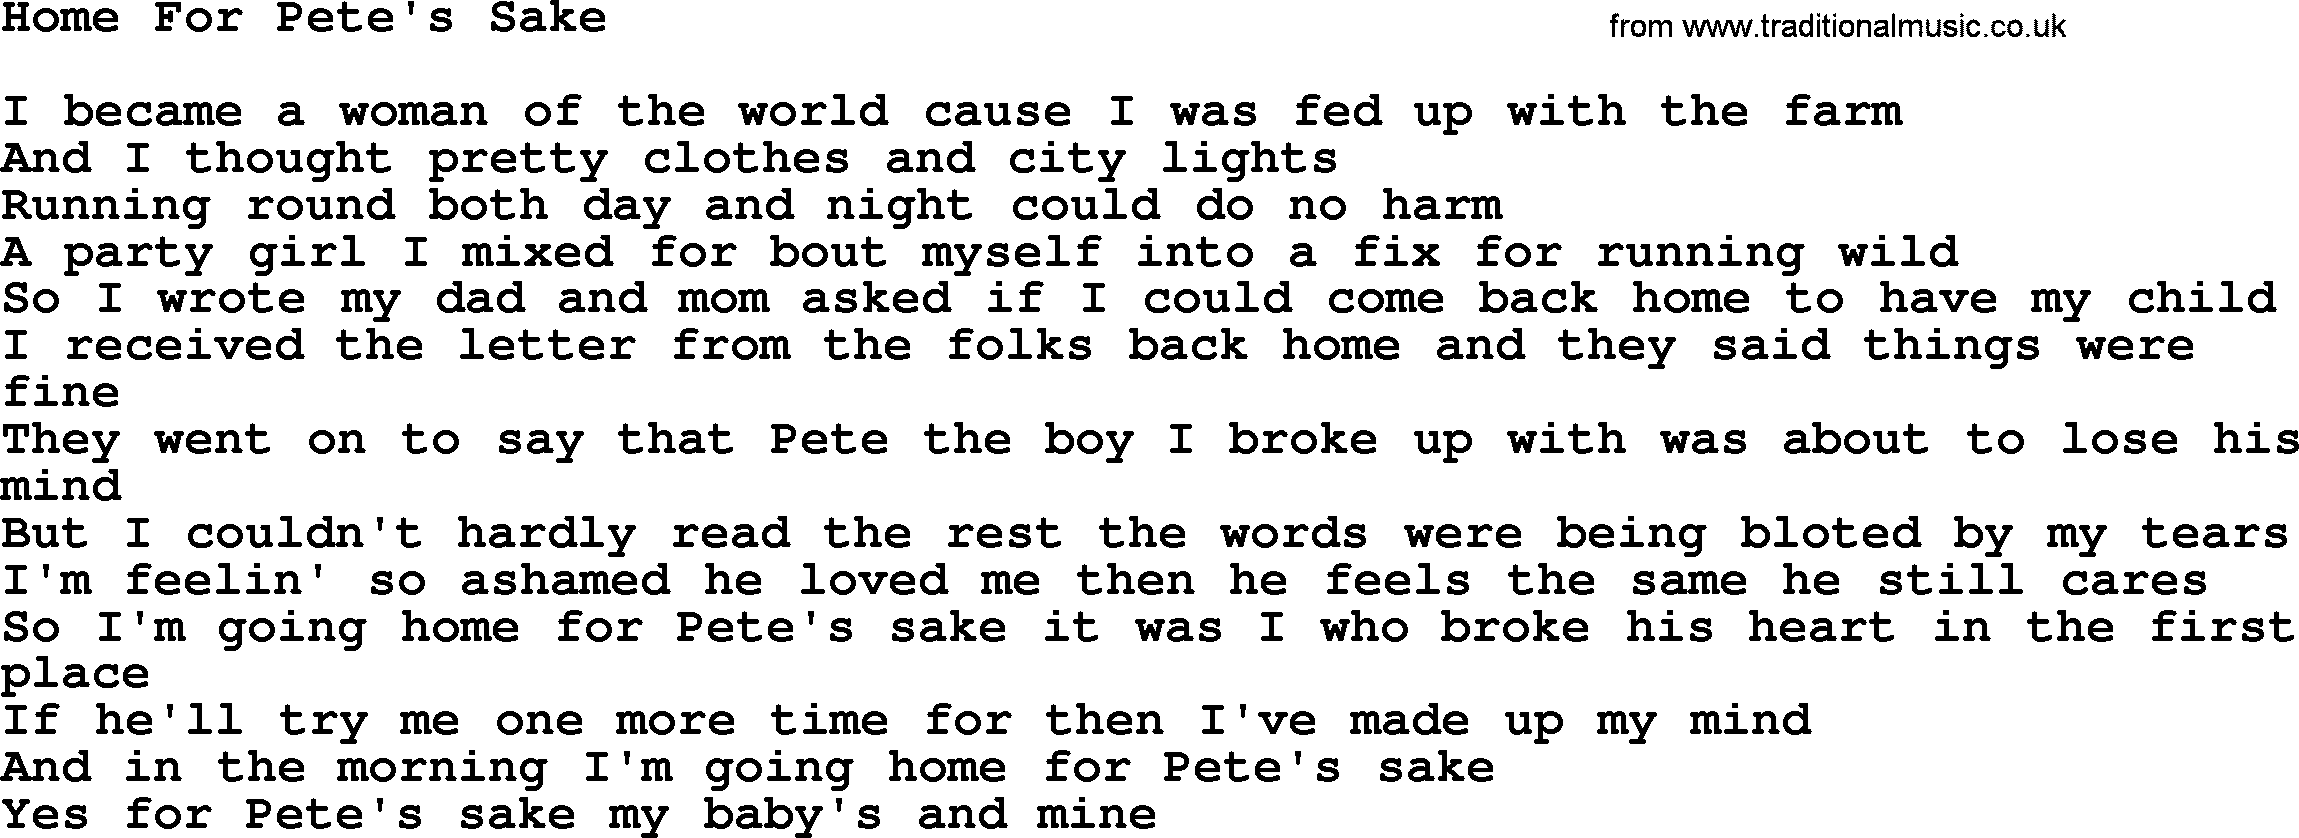 Dolly Parton song Home For Pete's Sake.txt lyrics